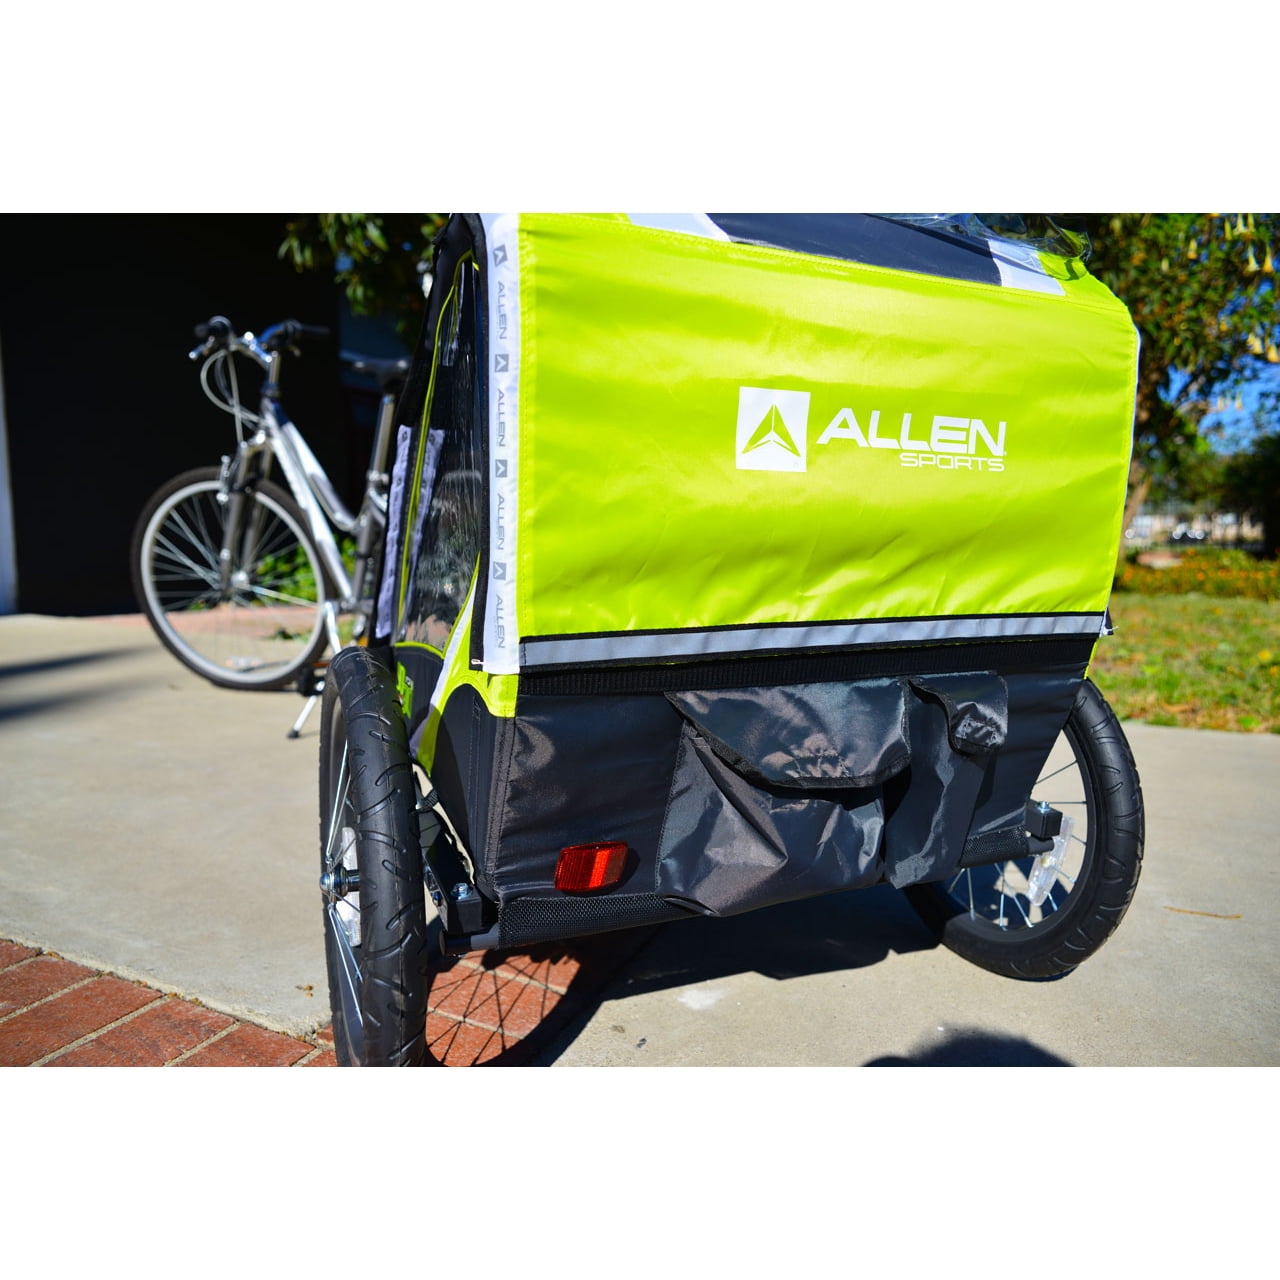 Allen Sports T2-G Deluxe 2-Child Bike Trailer Green for sale online